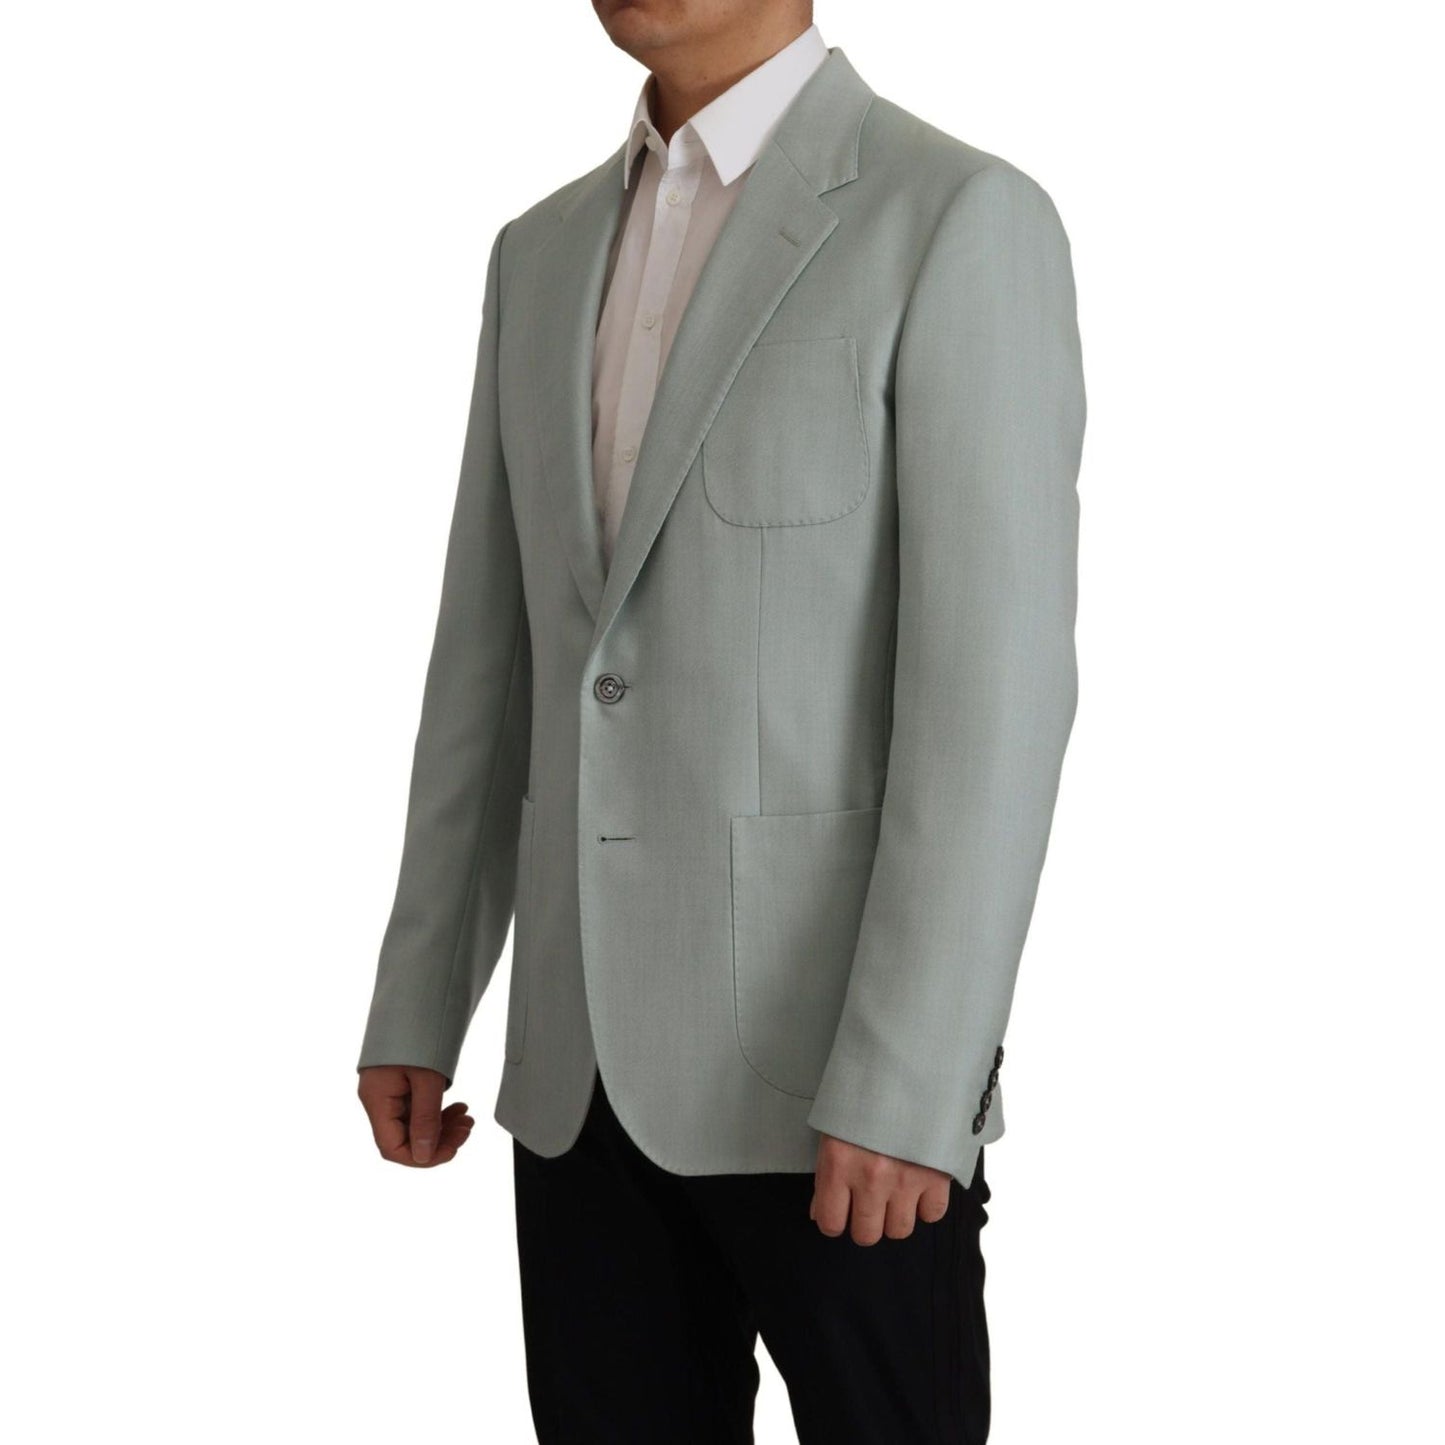 Dolce & Gabbana Elegant Slim Fit Cashmere Silk Blazer Jacket light-green-cashmere-silk-blazer